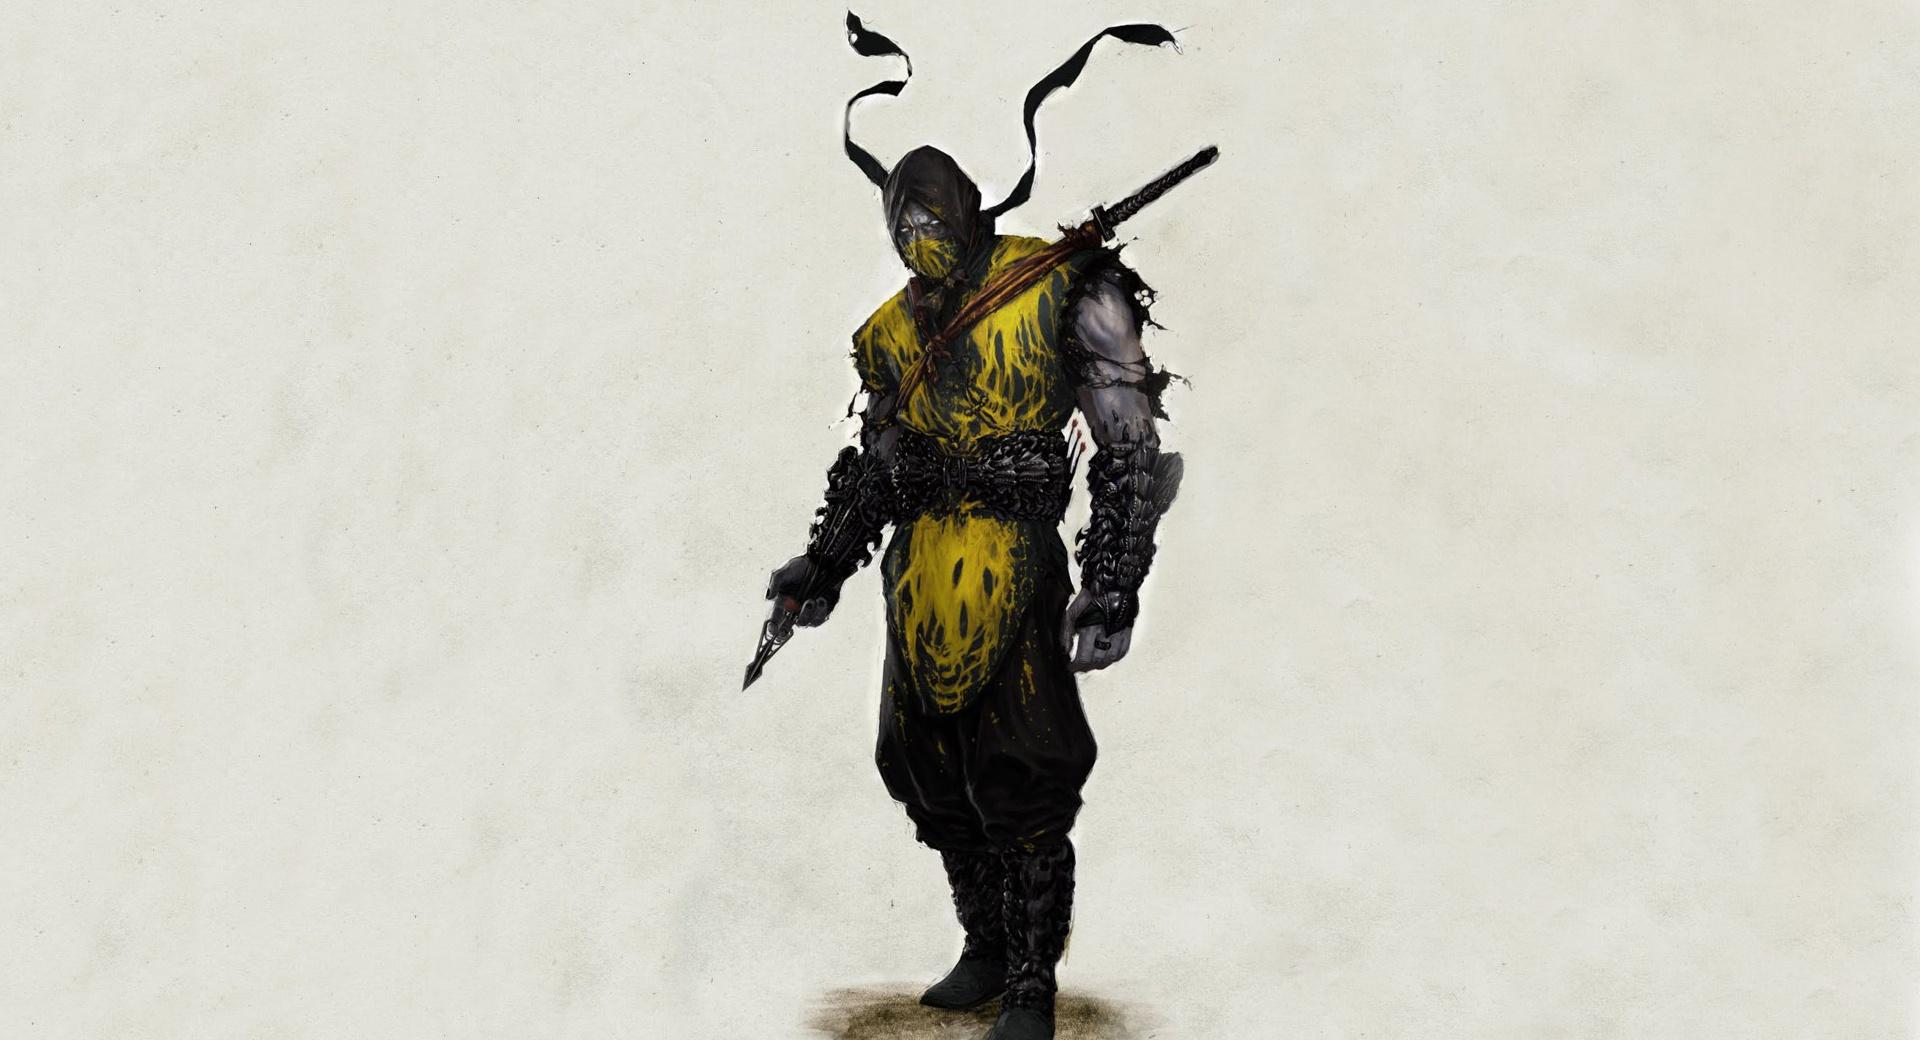 Mortal Kombat Scorpion Drawing wallpapers HD quality